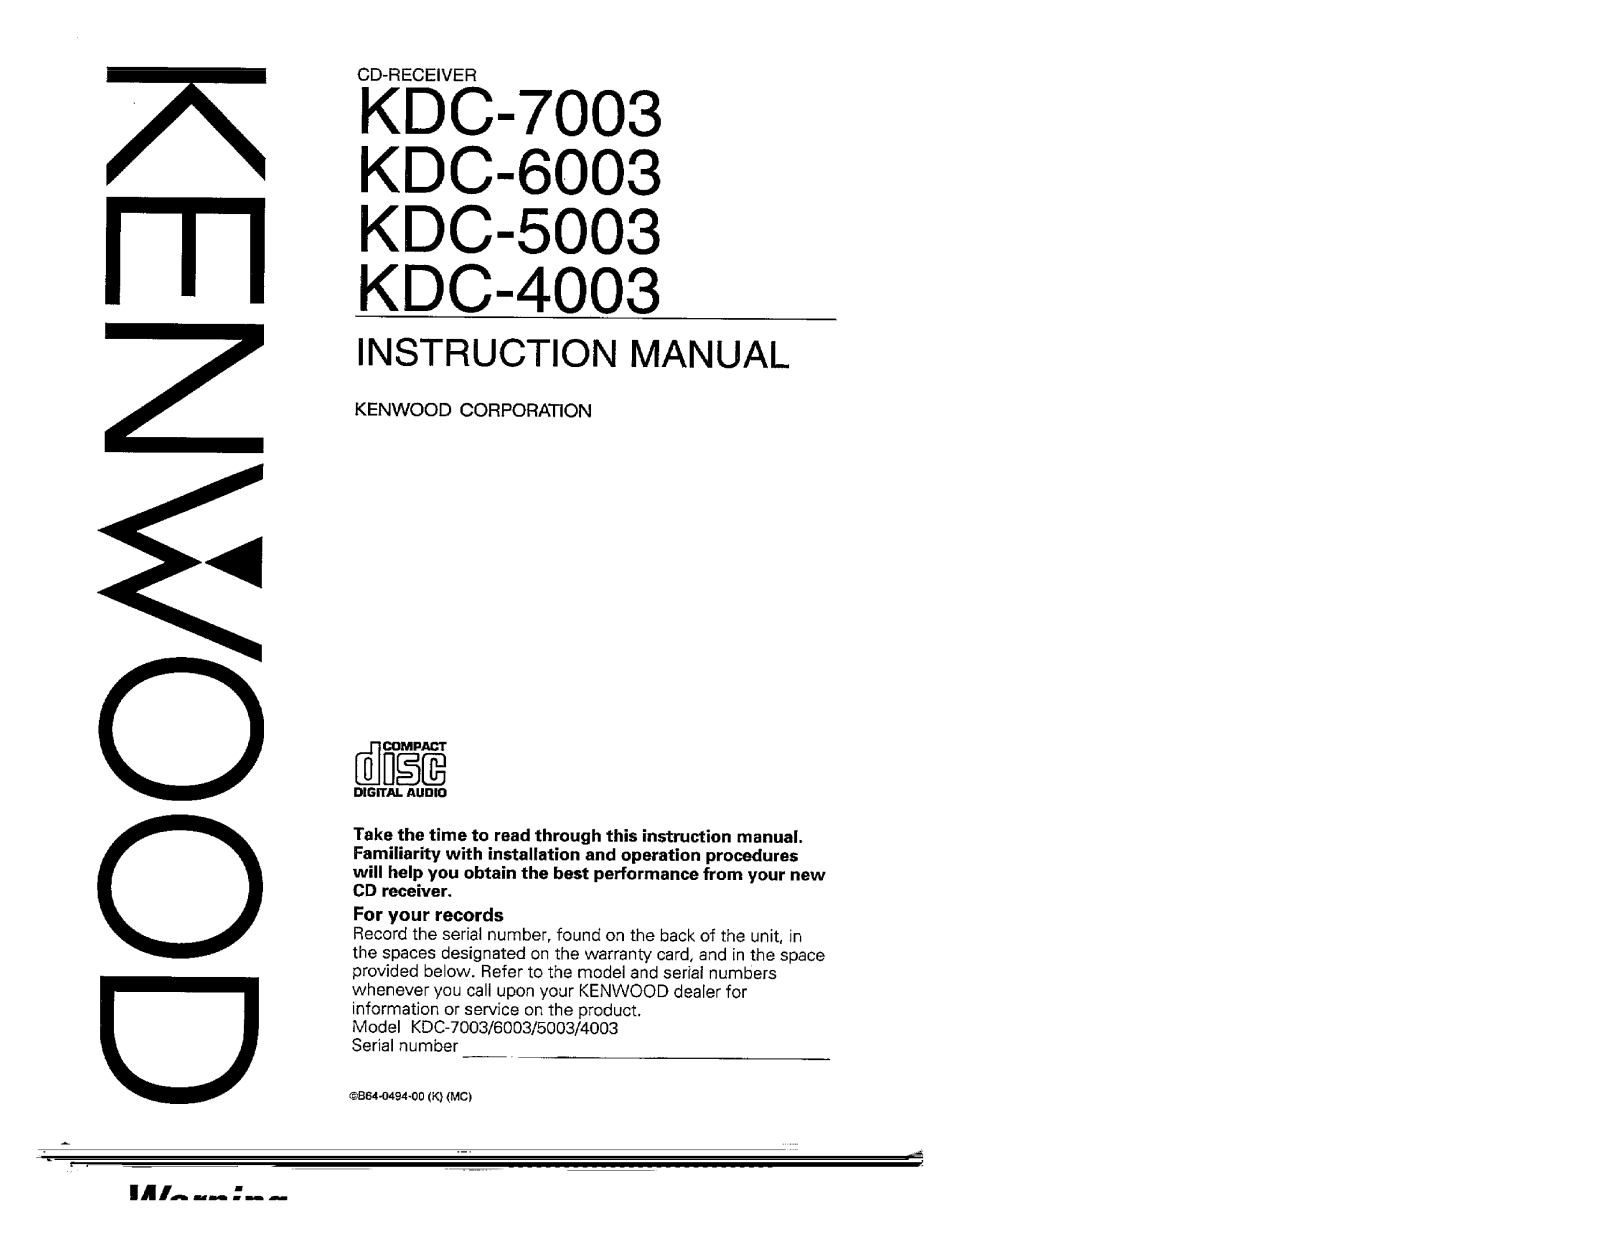 Kenwood KDC-7003, KDC-5003, KDC-6003, KDC-4003 Owner's Manual